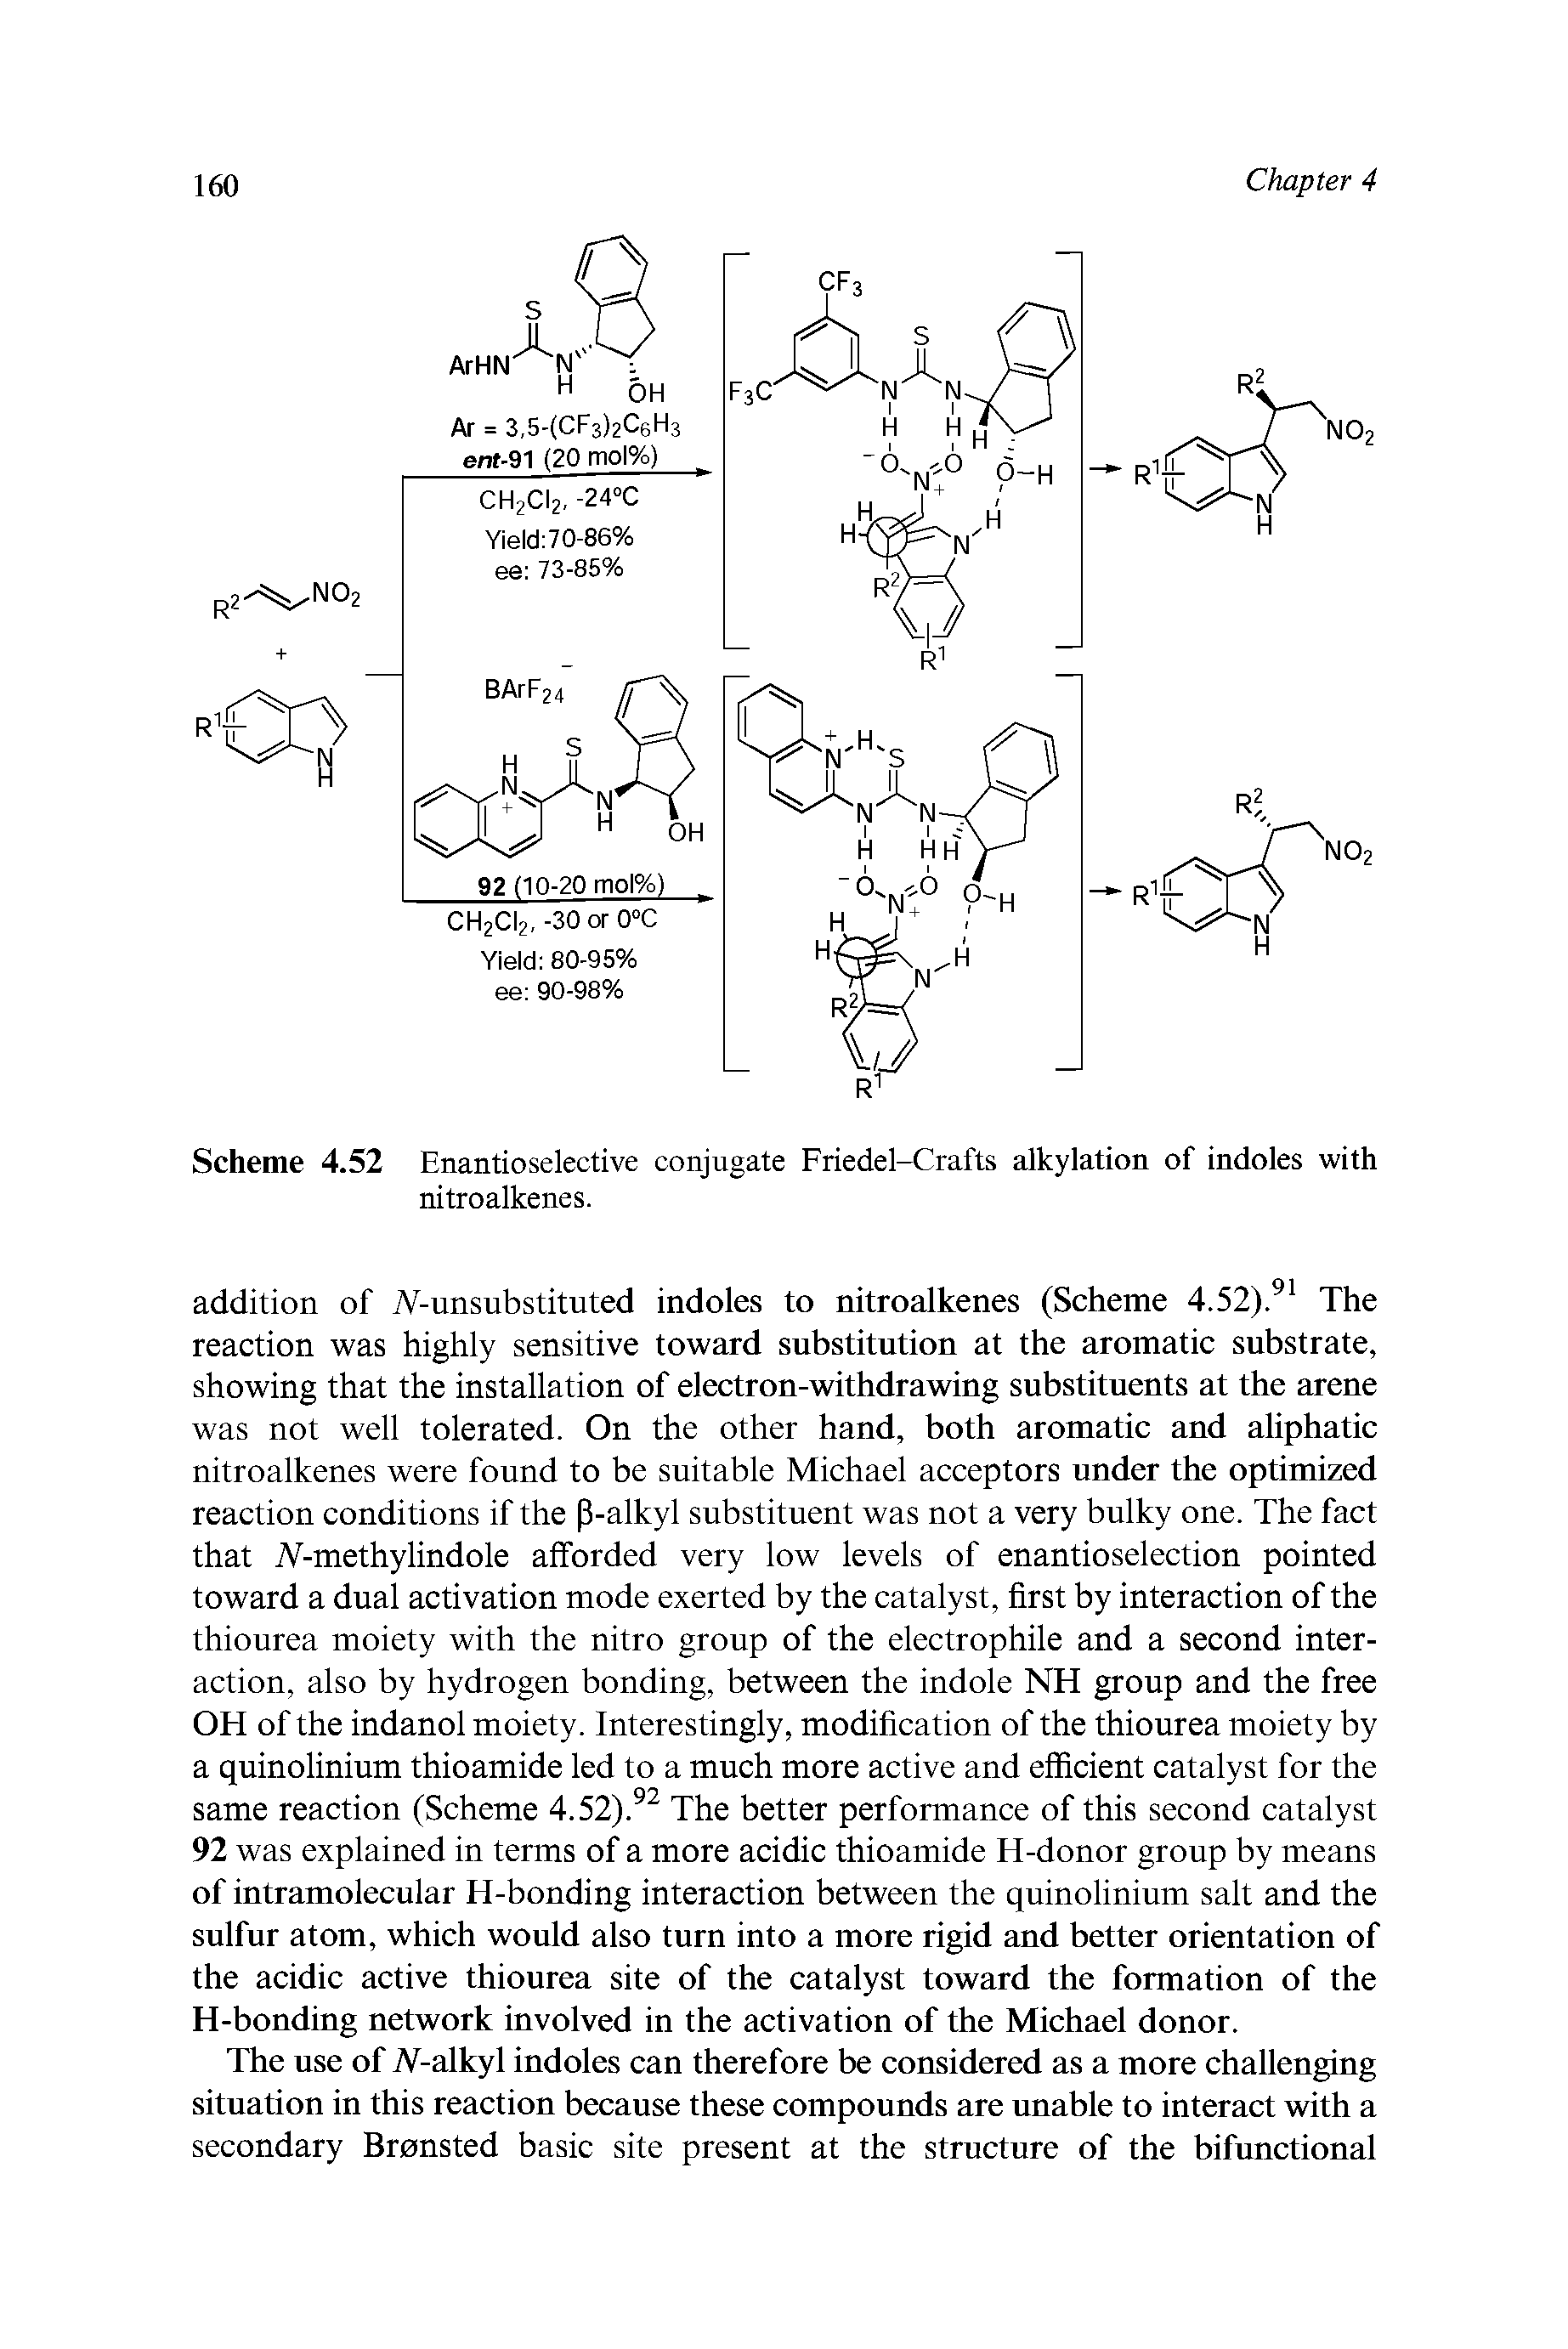 Scheme 4.52 Enantioselective conjugate Friedel-Crafts alkylation of indoles with nitroalkenes.